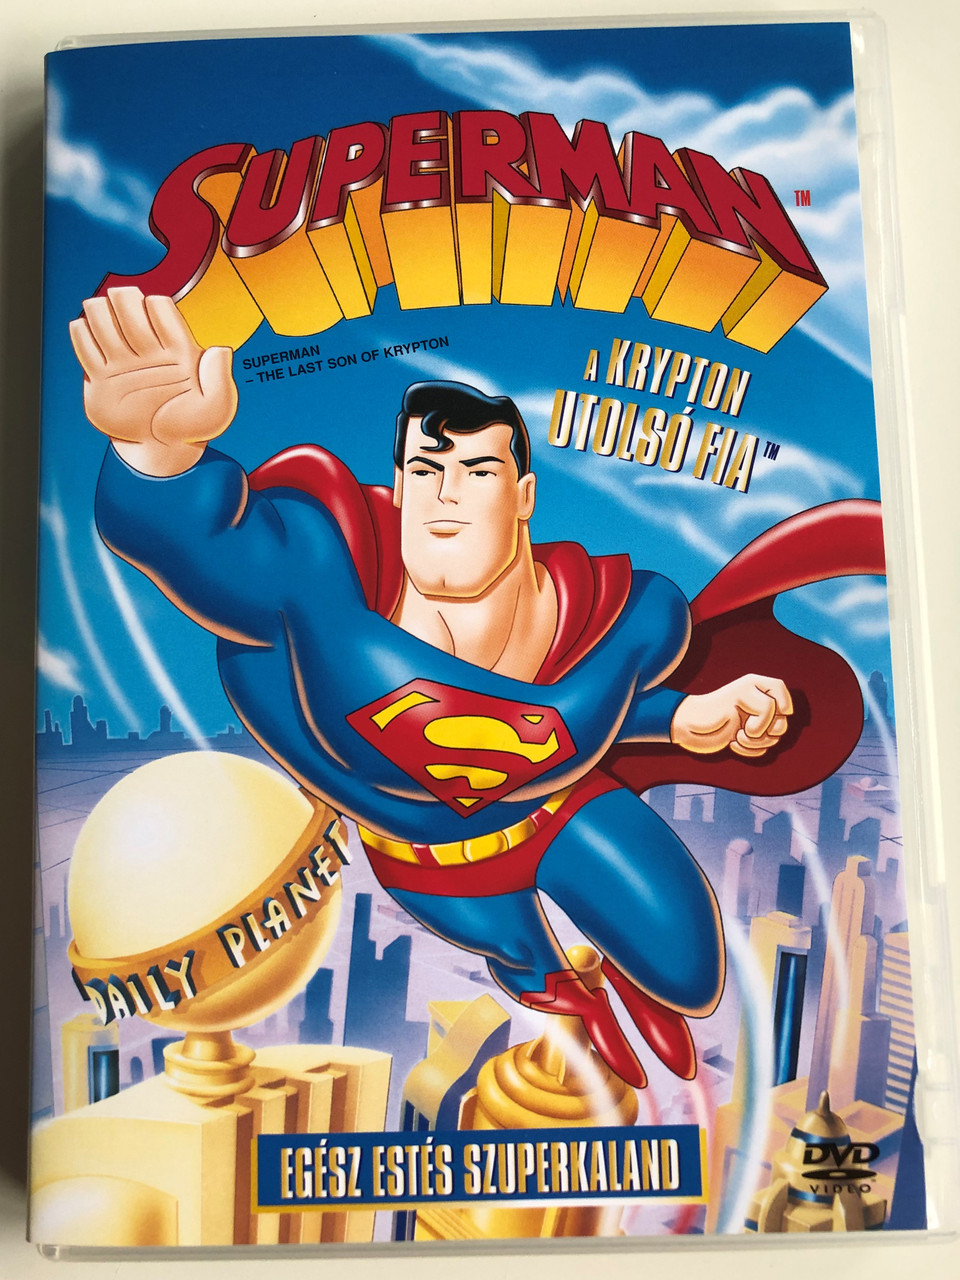 Superman - The last son of Krypton DVD 1996 Superman - a Krypton utolsó fia  / Directed by Dan Riba, Scott Jeralds / Voices: Tim Daly, Dana Delany,  Clancy Brown, Malcolm McDowell - bibleinmylanguage